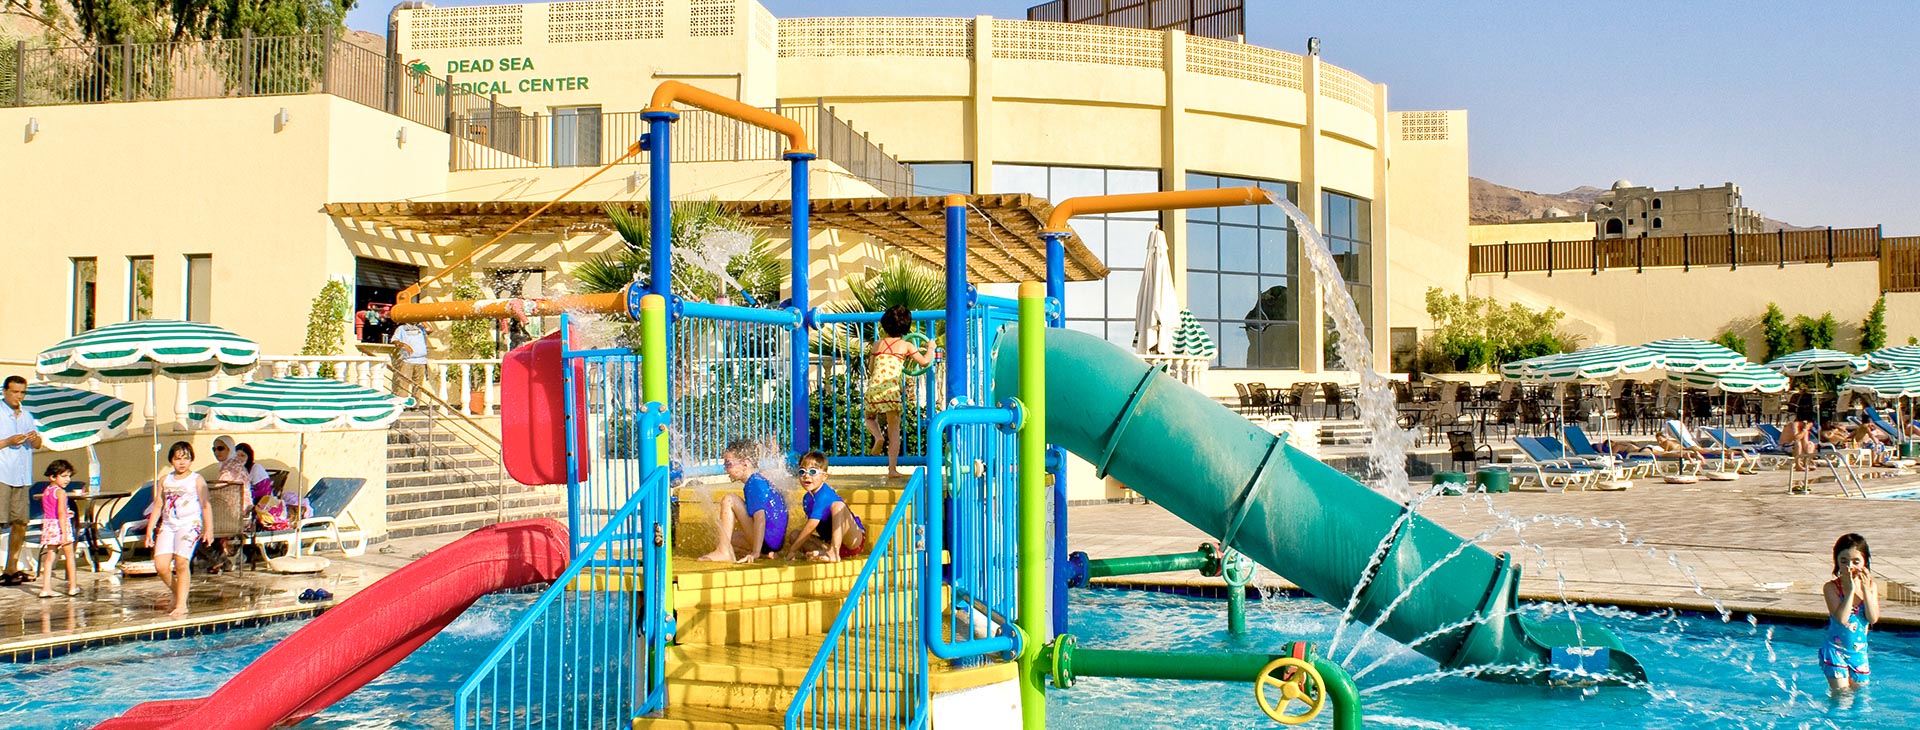 Dead Sea Spa Hotel Obrázek16